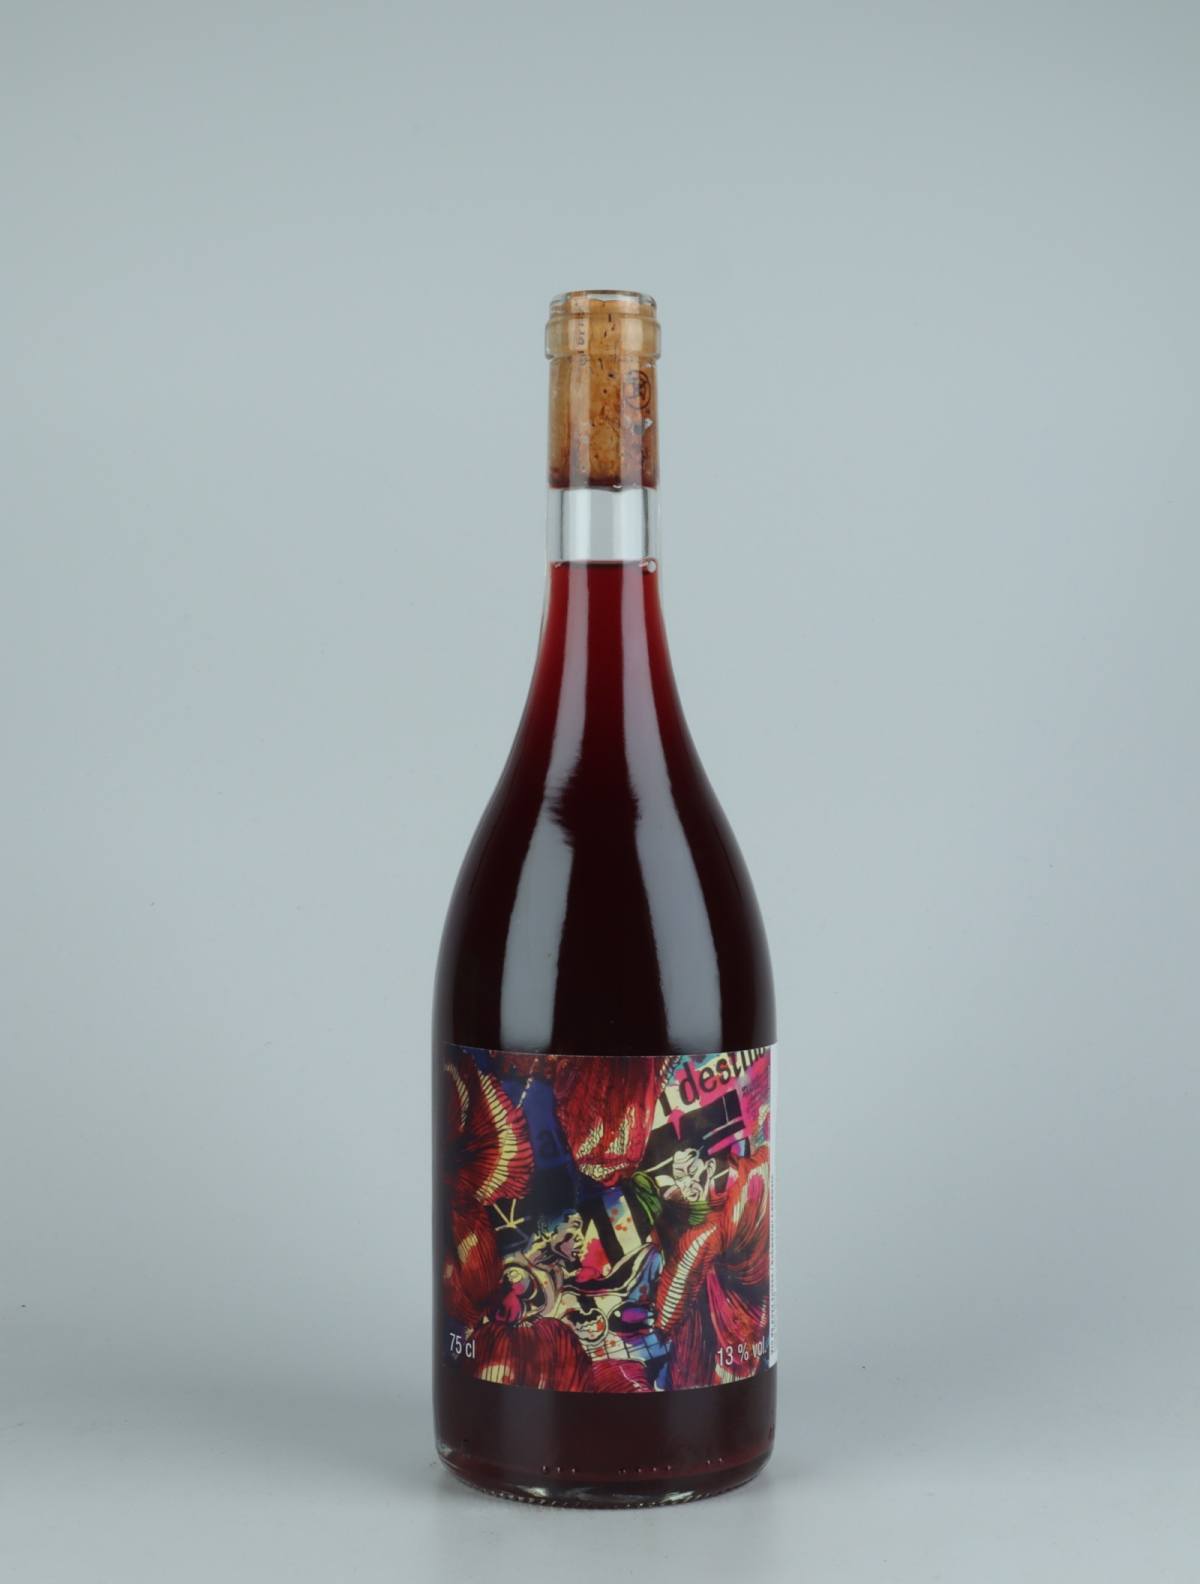 A bottle 2019 Pinot Noir Red wine from Les Vins du Fab, Neuchâtel in Switzerland